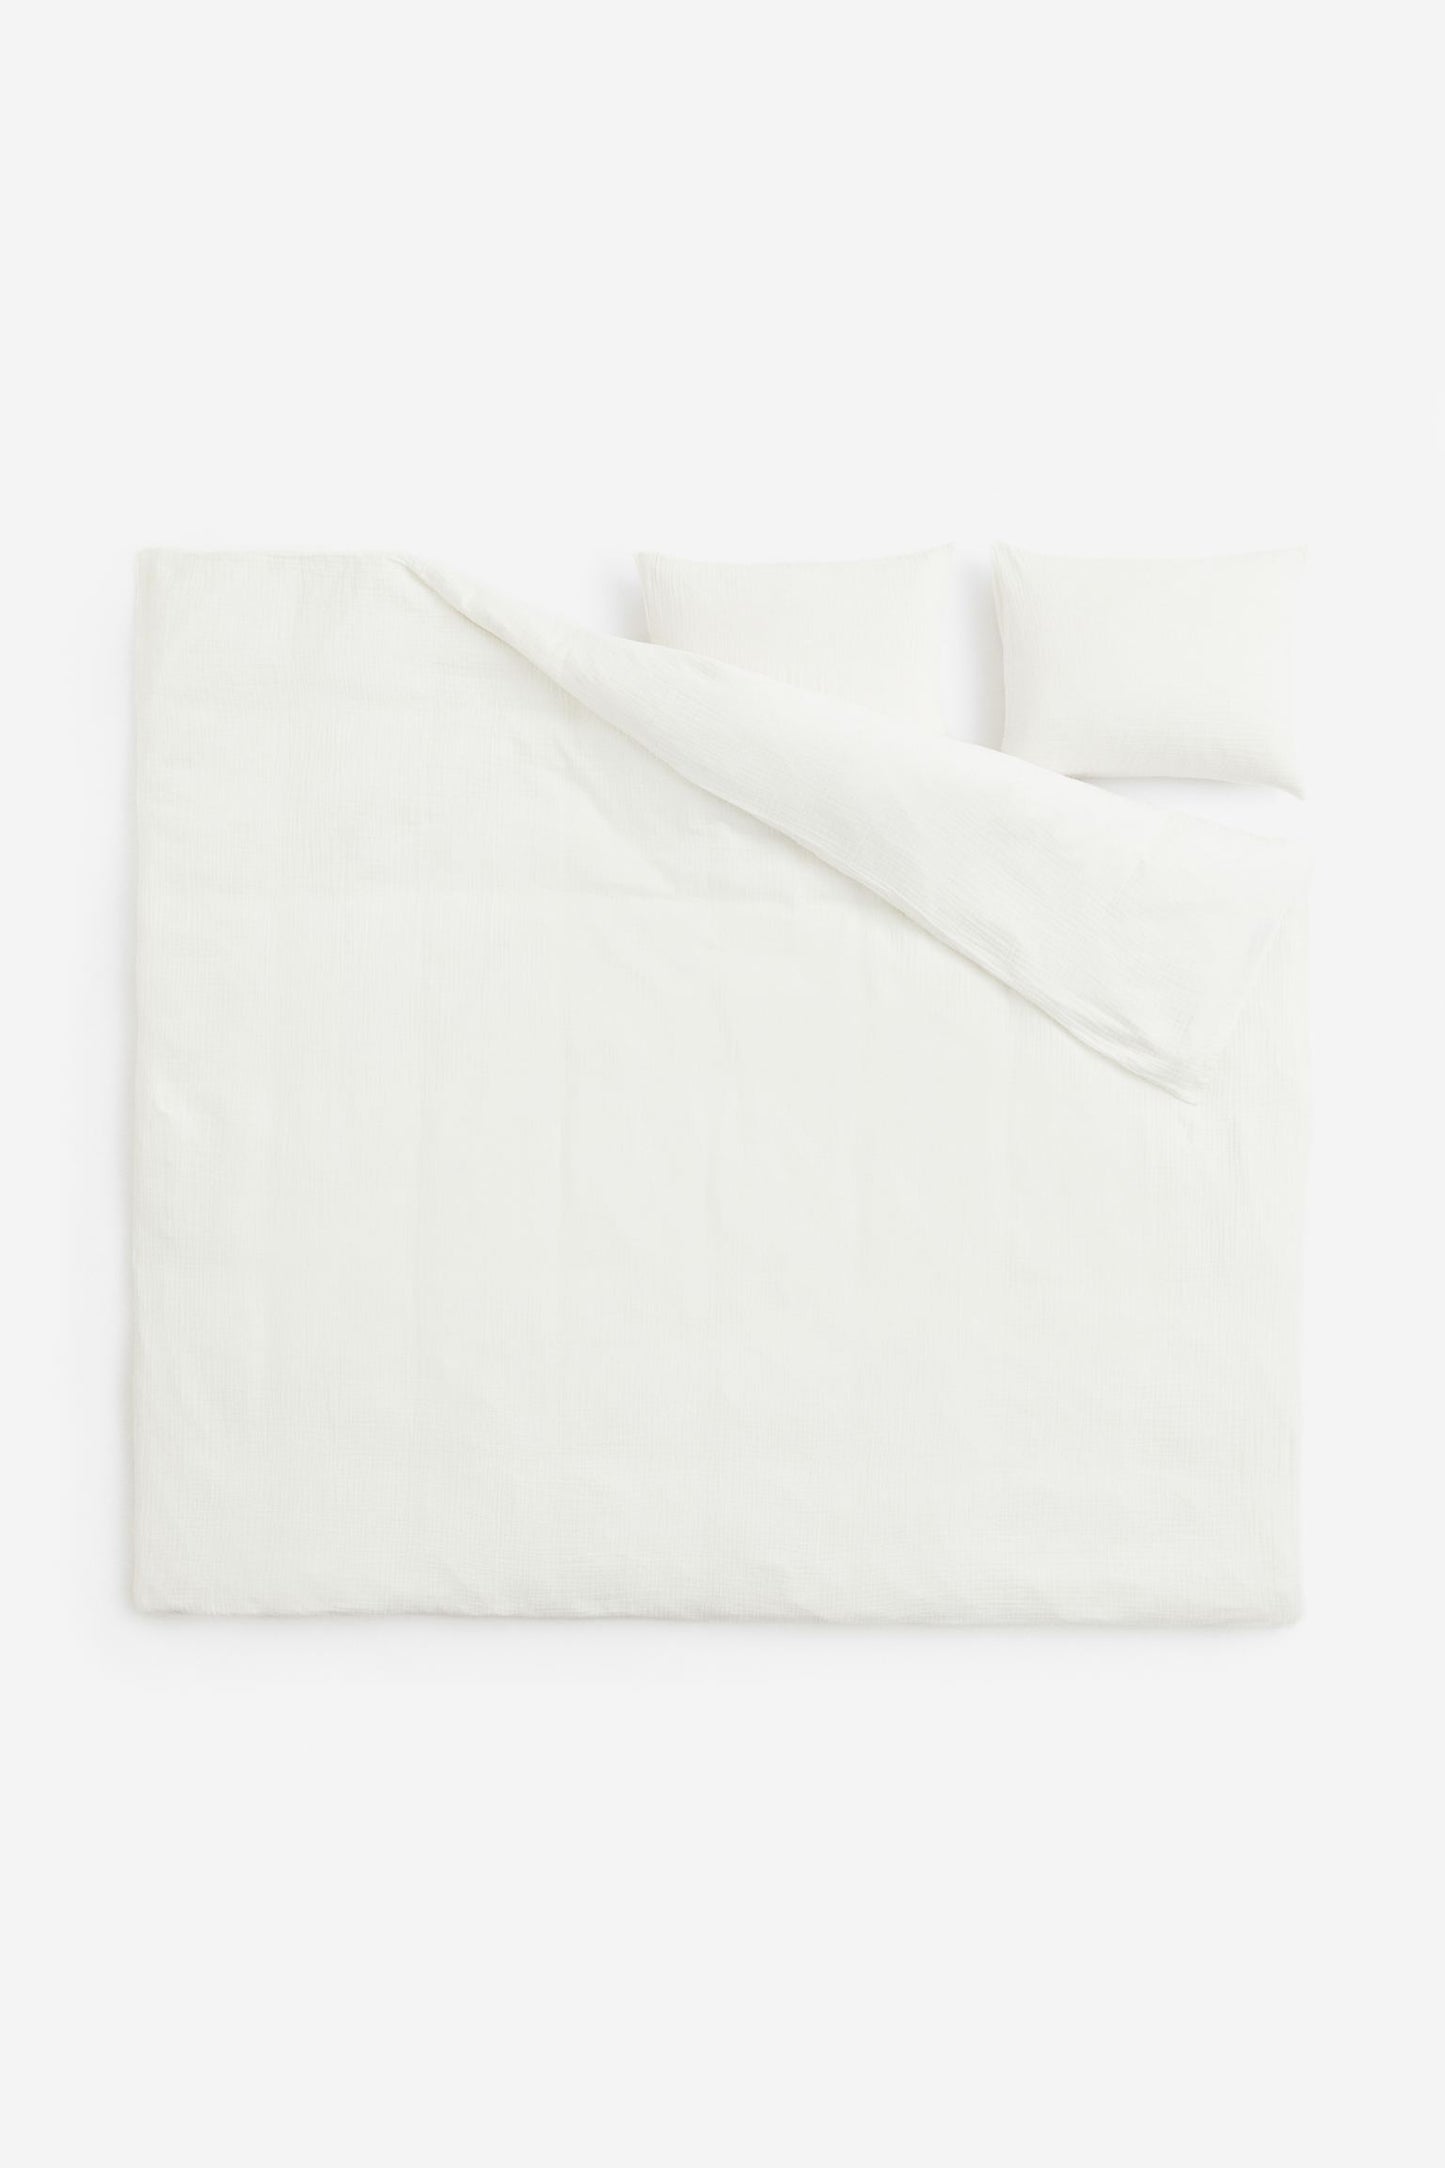 Duvet cover set, off white cotton muslin, king